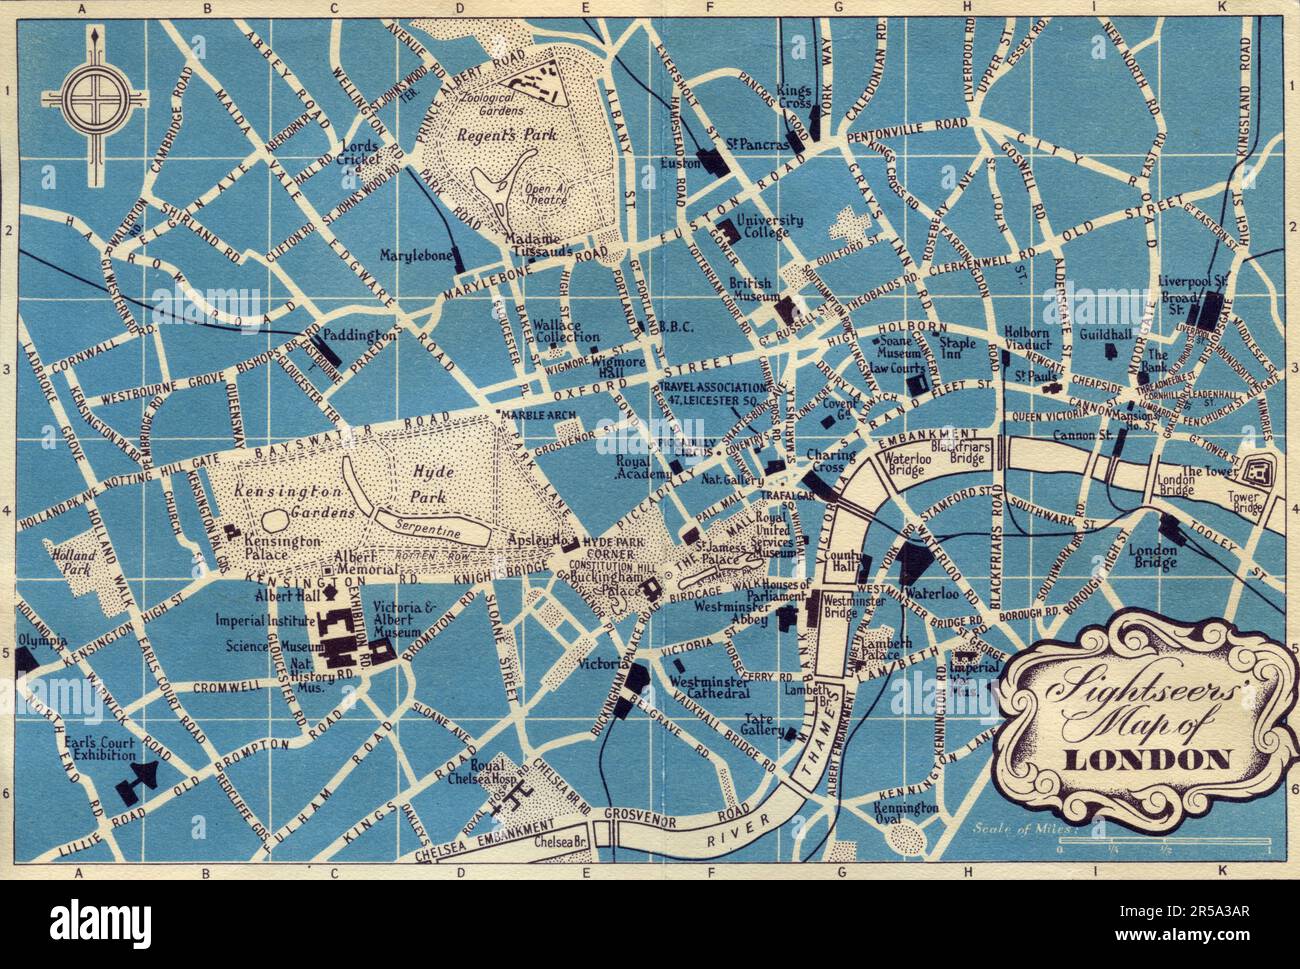 Sightseers' Map of London, UK 1950s Stock Photo